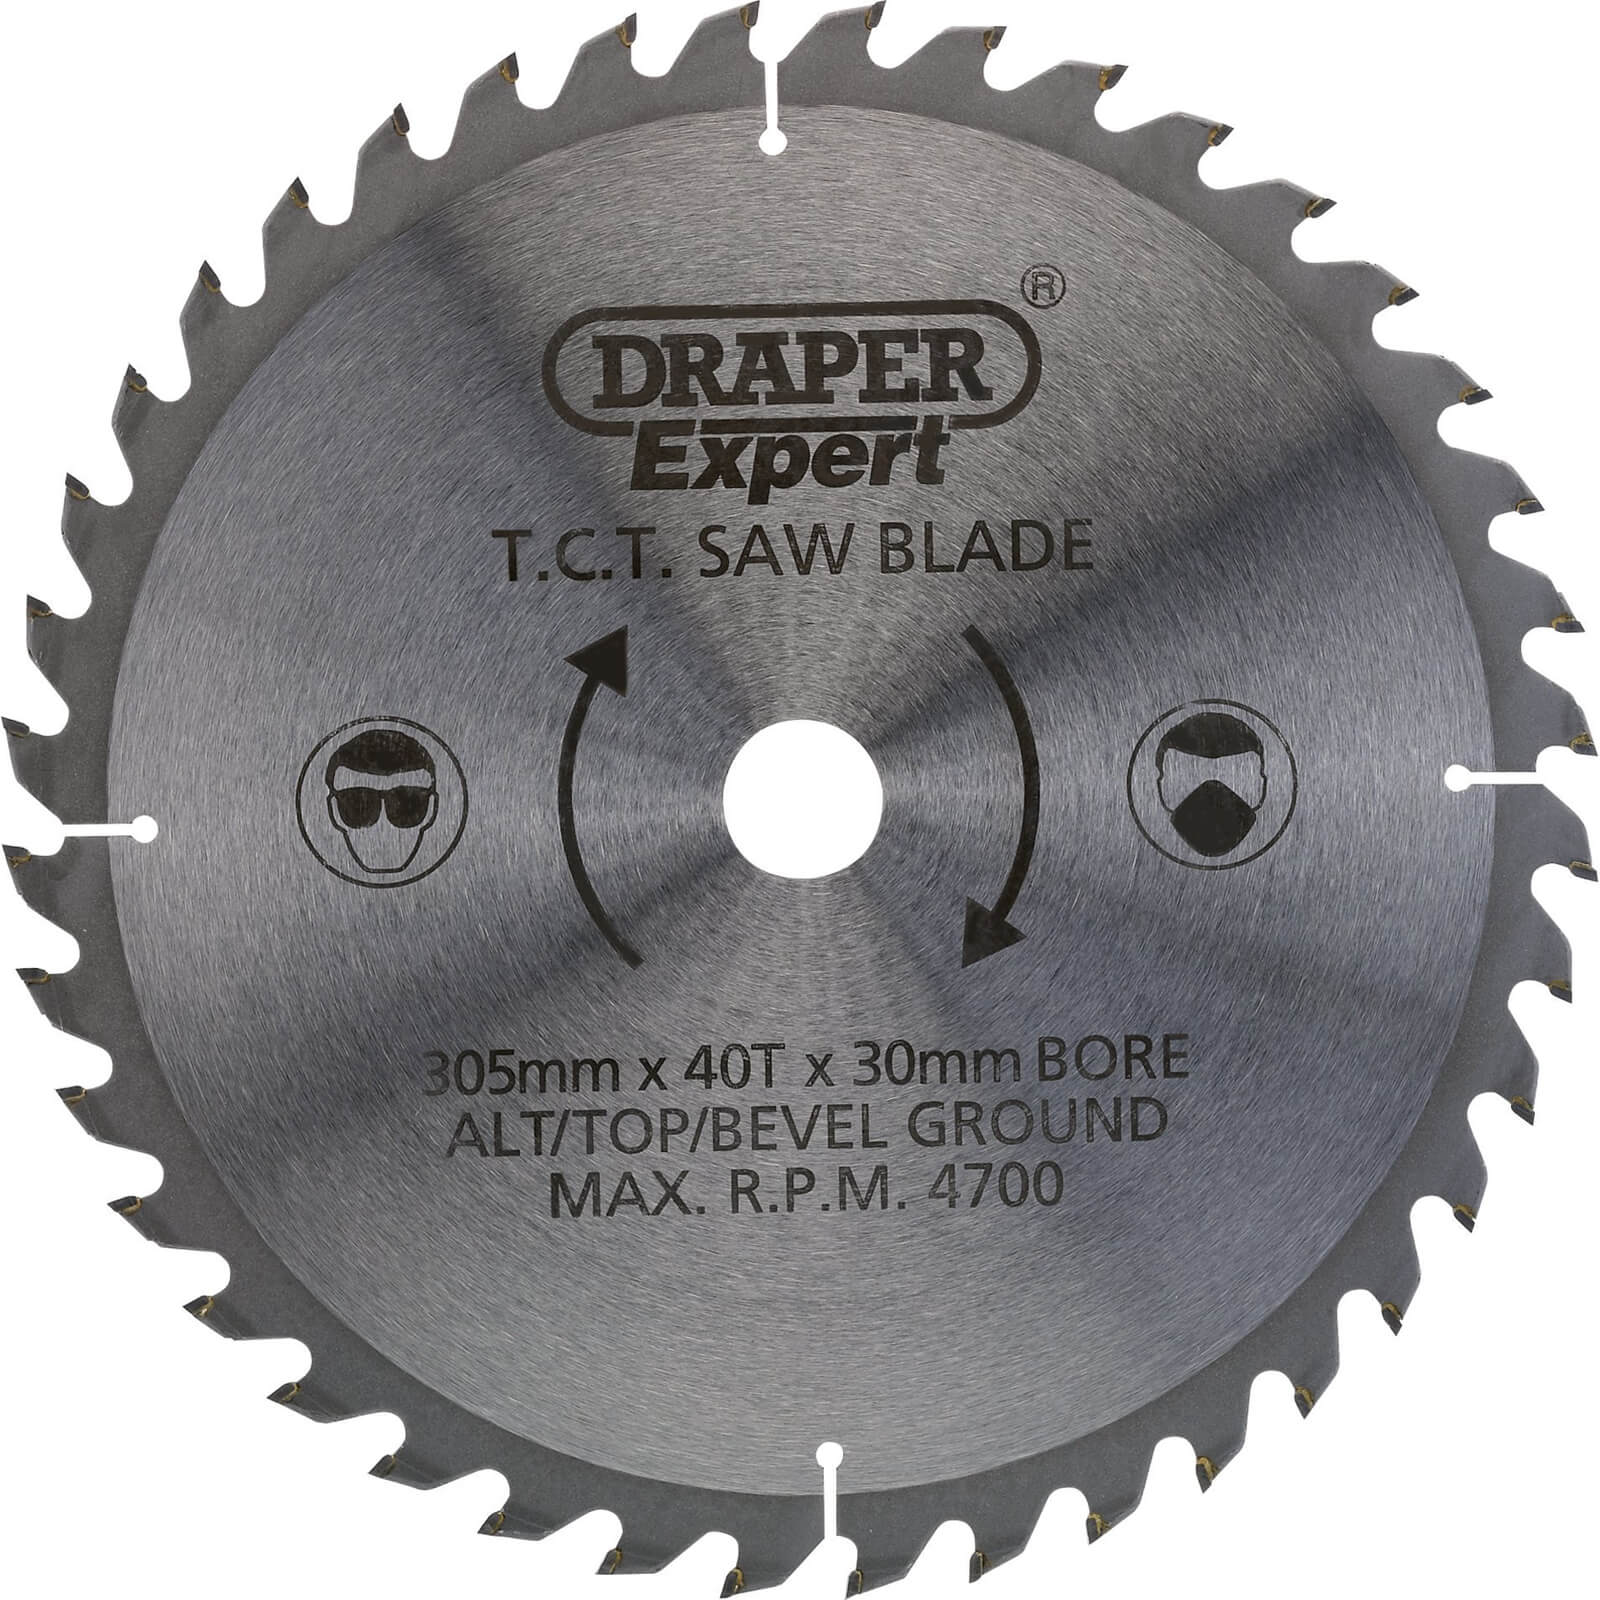 Photo of Draper Expert Circular Saw Blade 305mm 40t 30mm